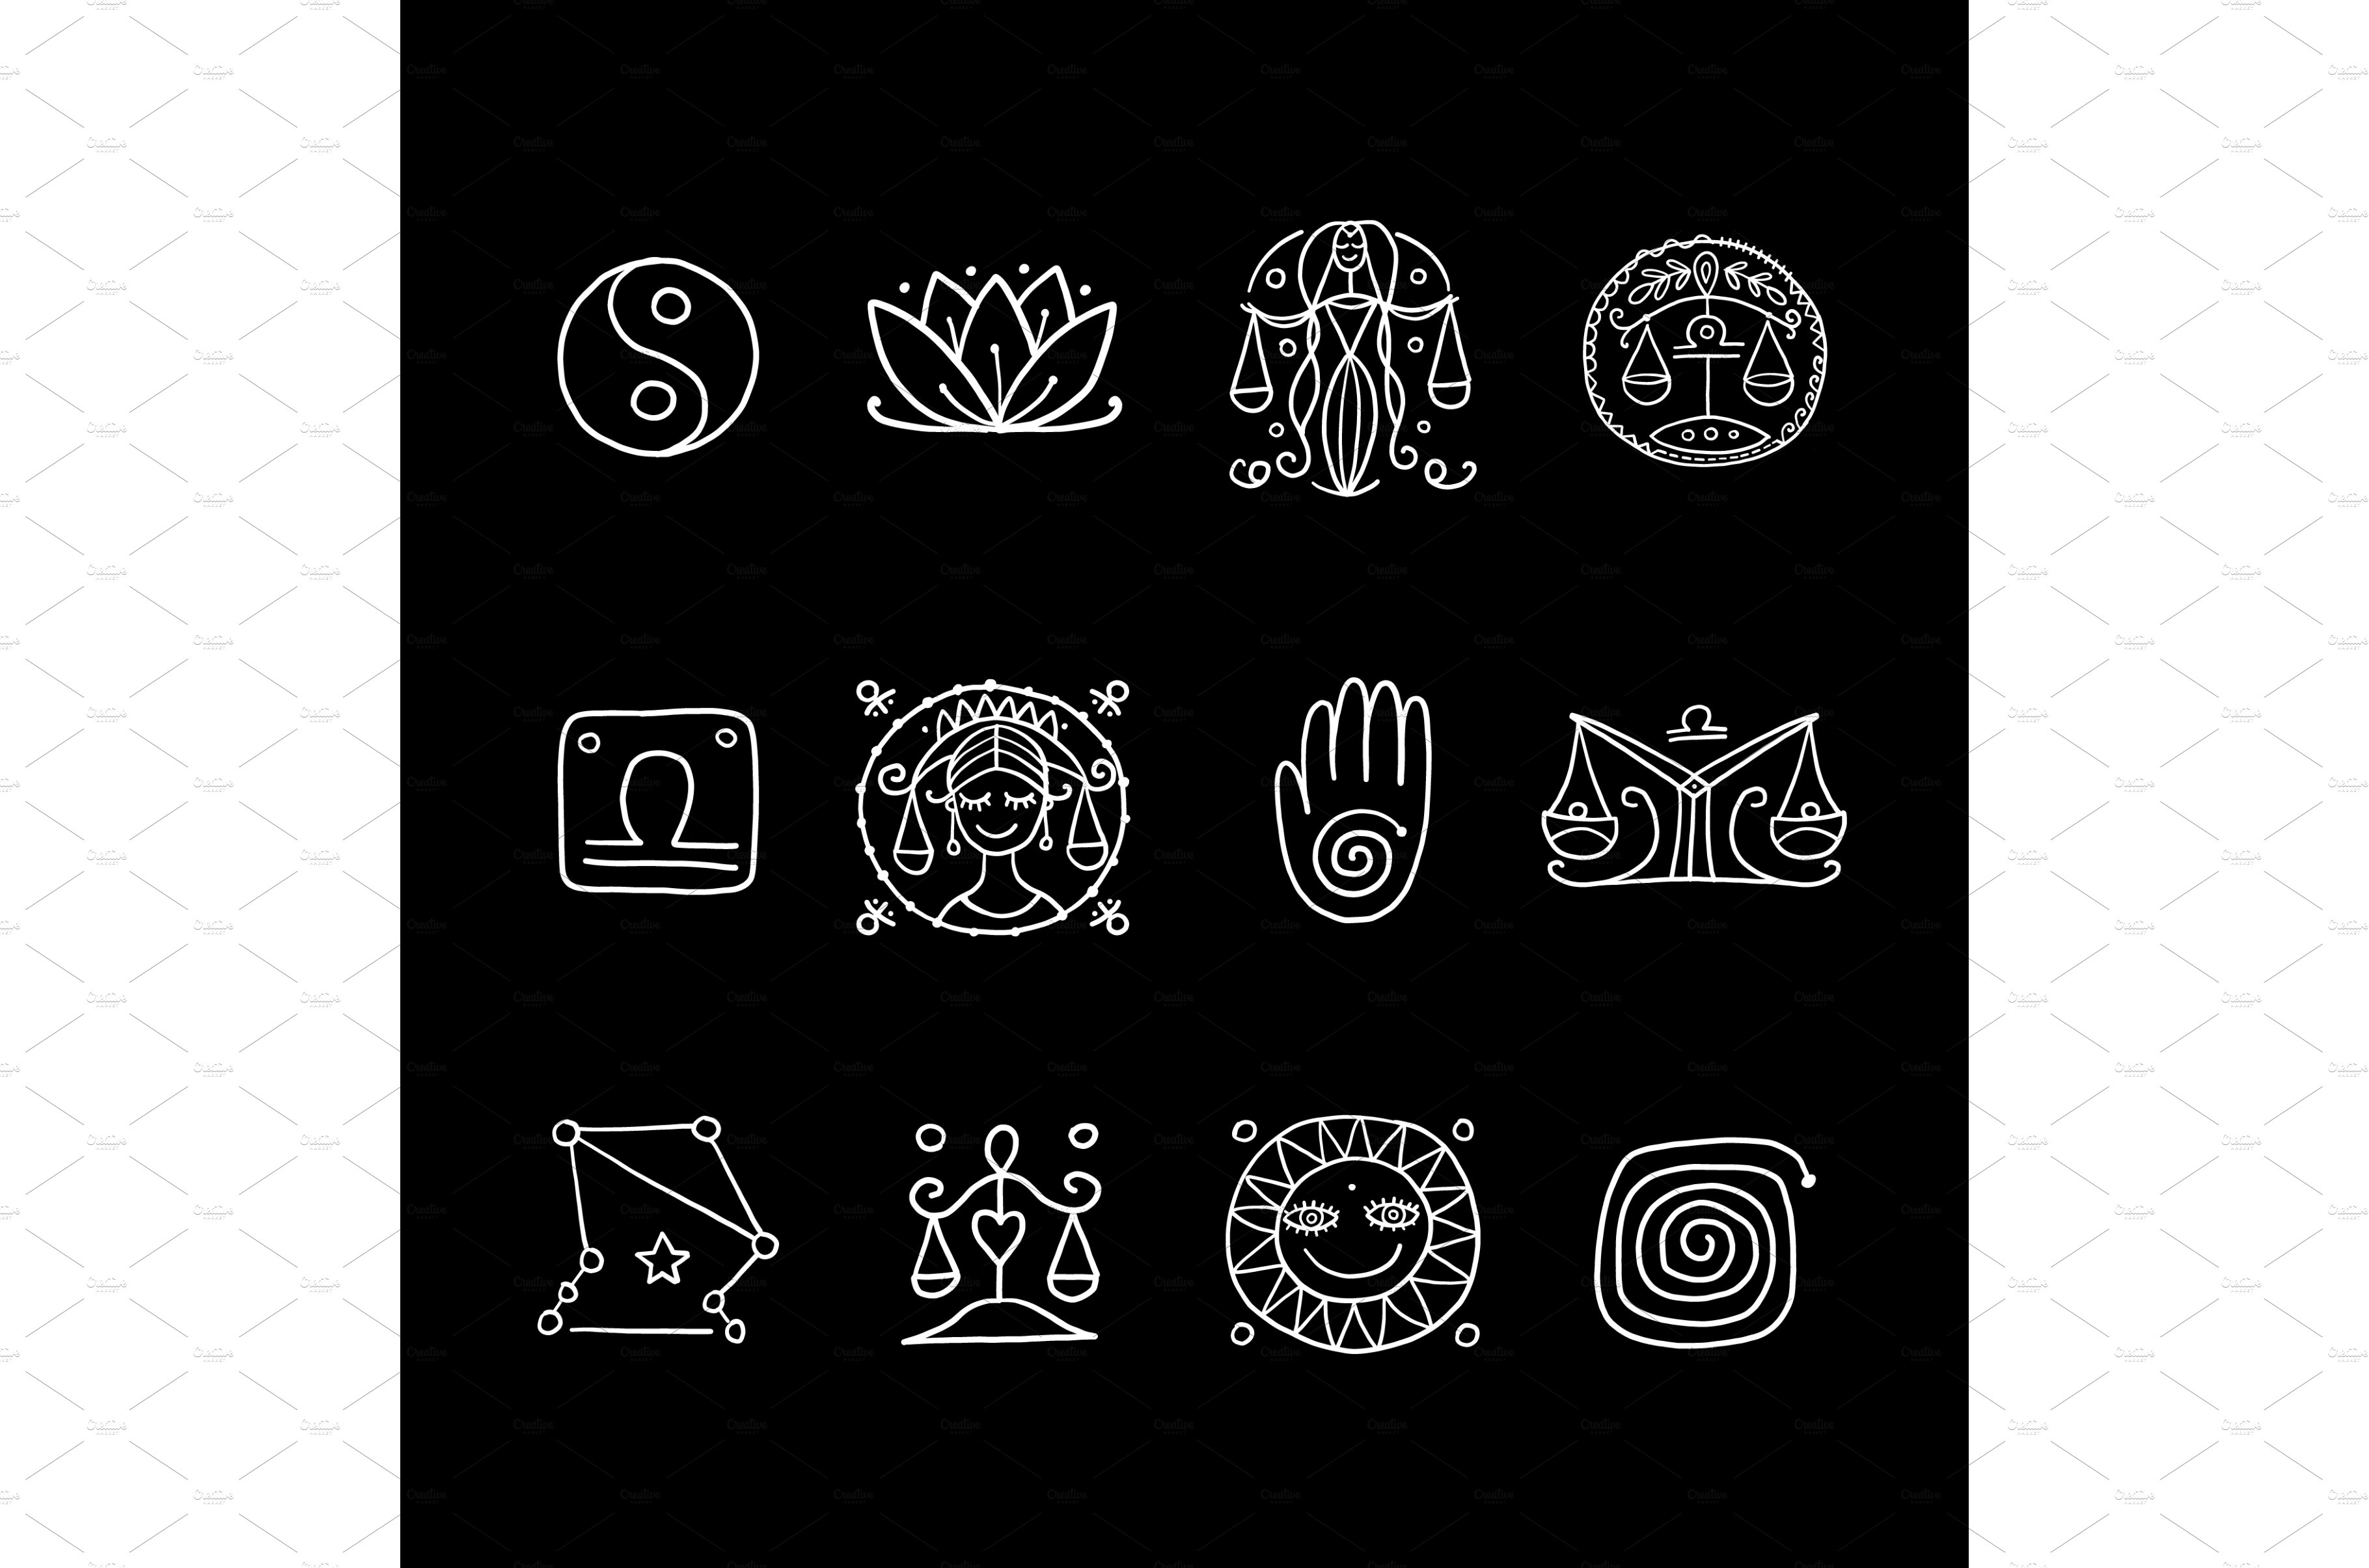 Libra zodiac icons for your design by Kudryashka Art on Dribbble